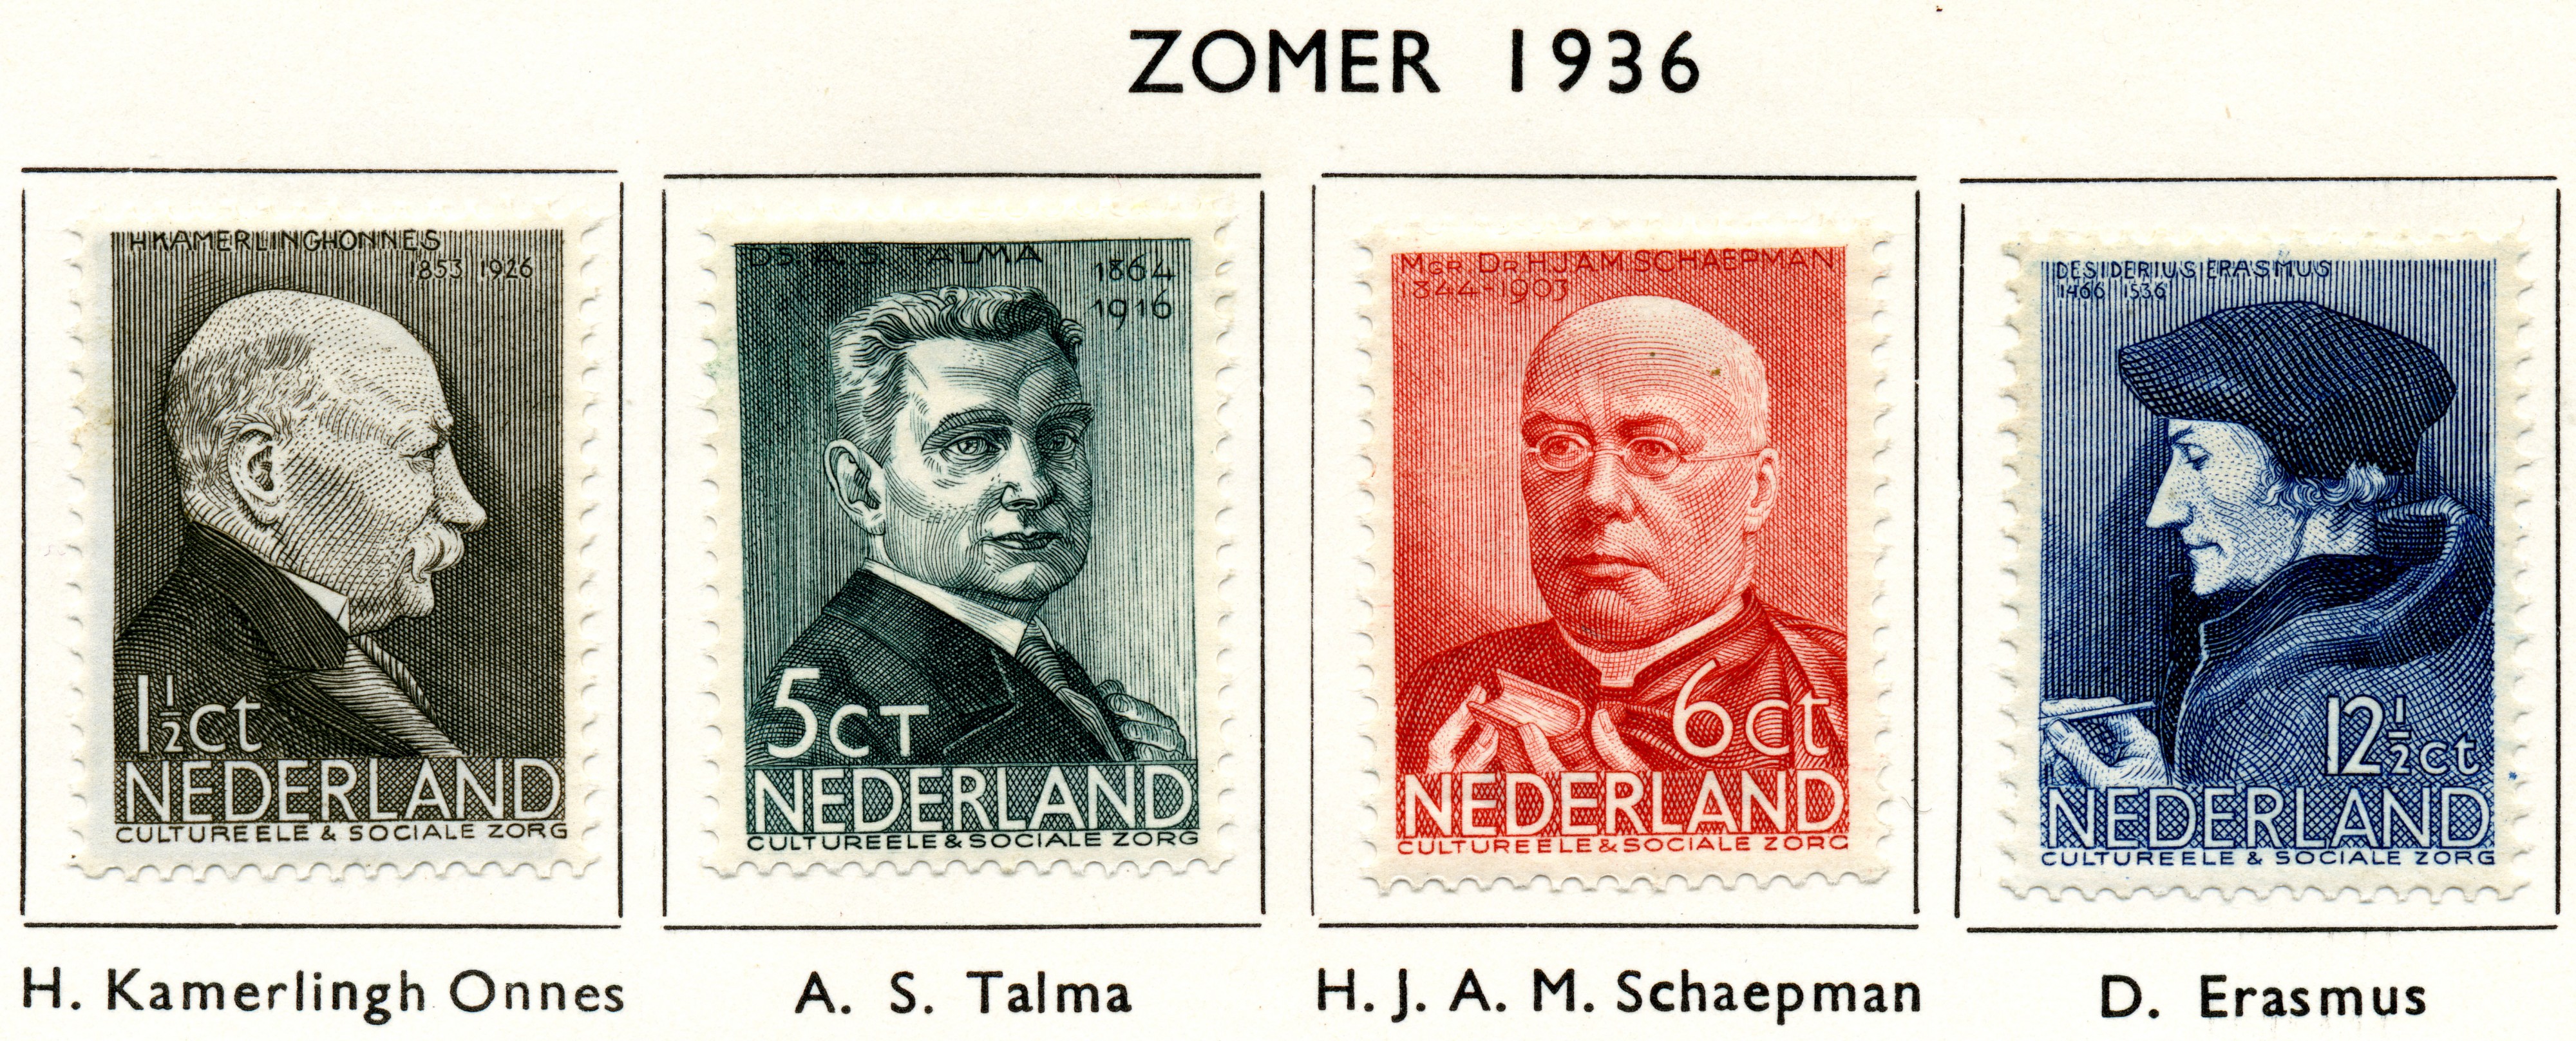 Postzegel 1936 zomer